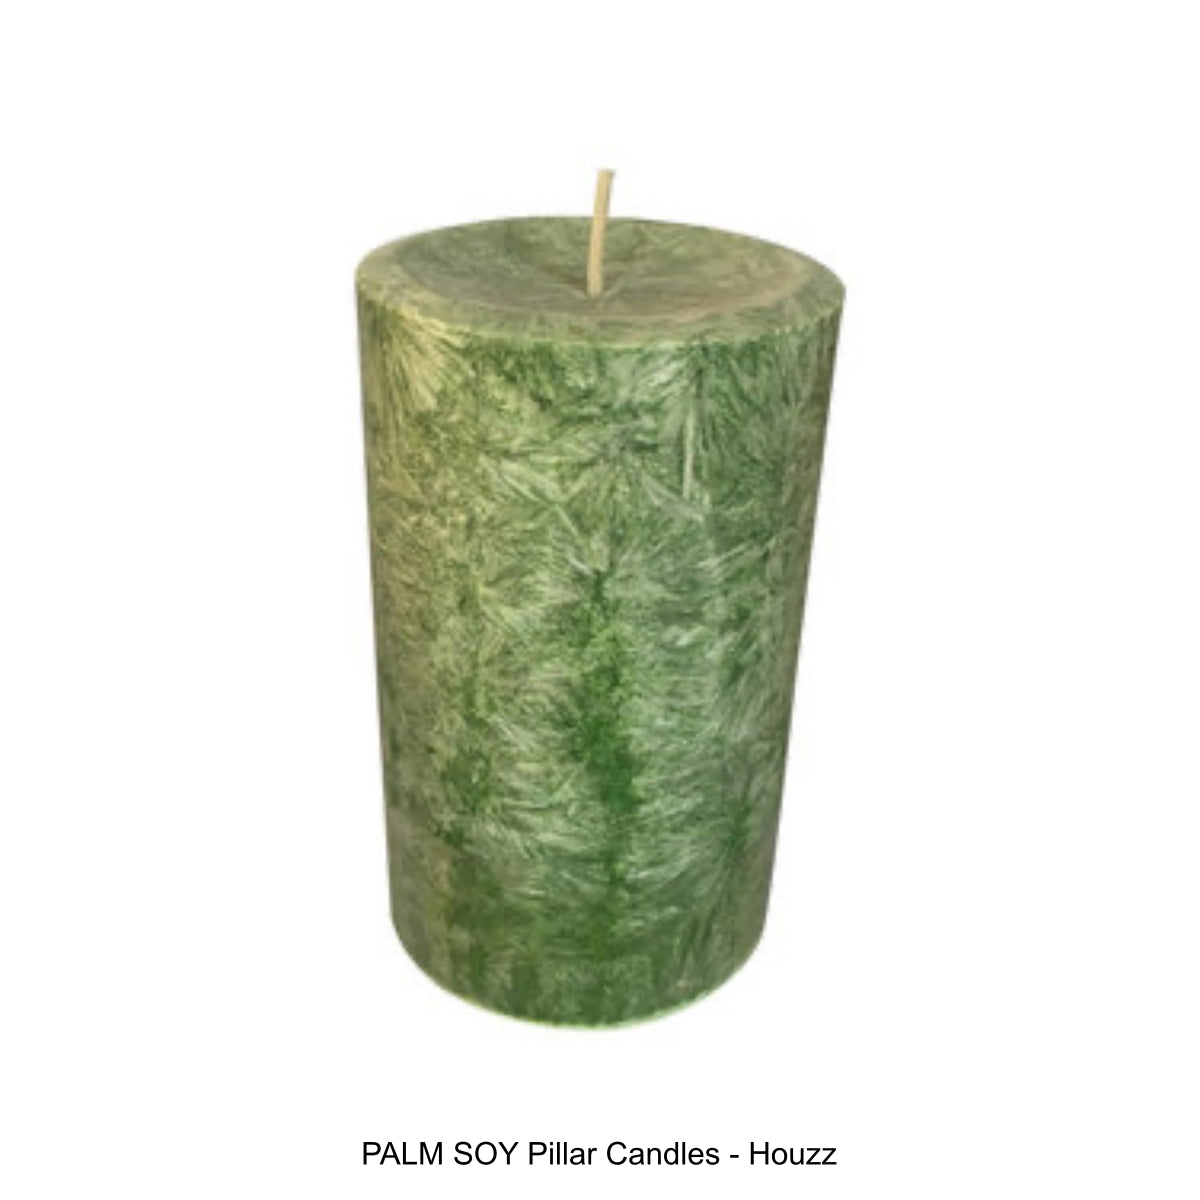 PALM SOY Pillar Candles - Houzz